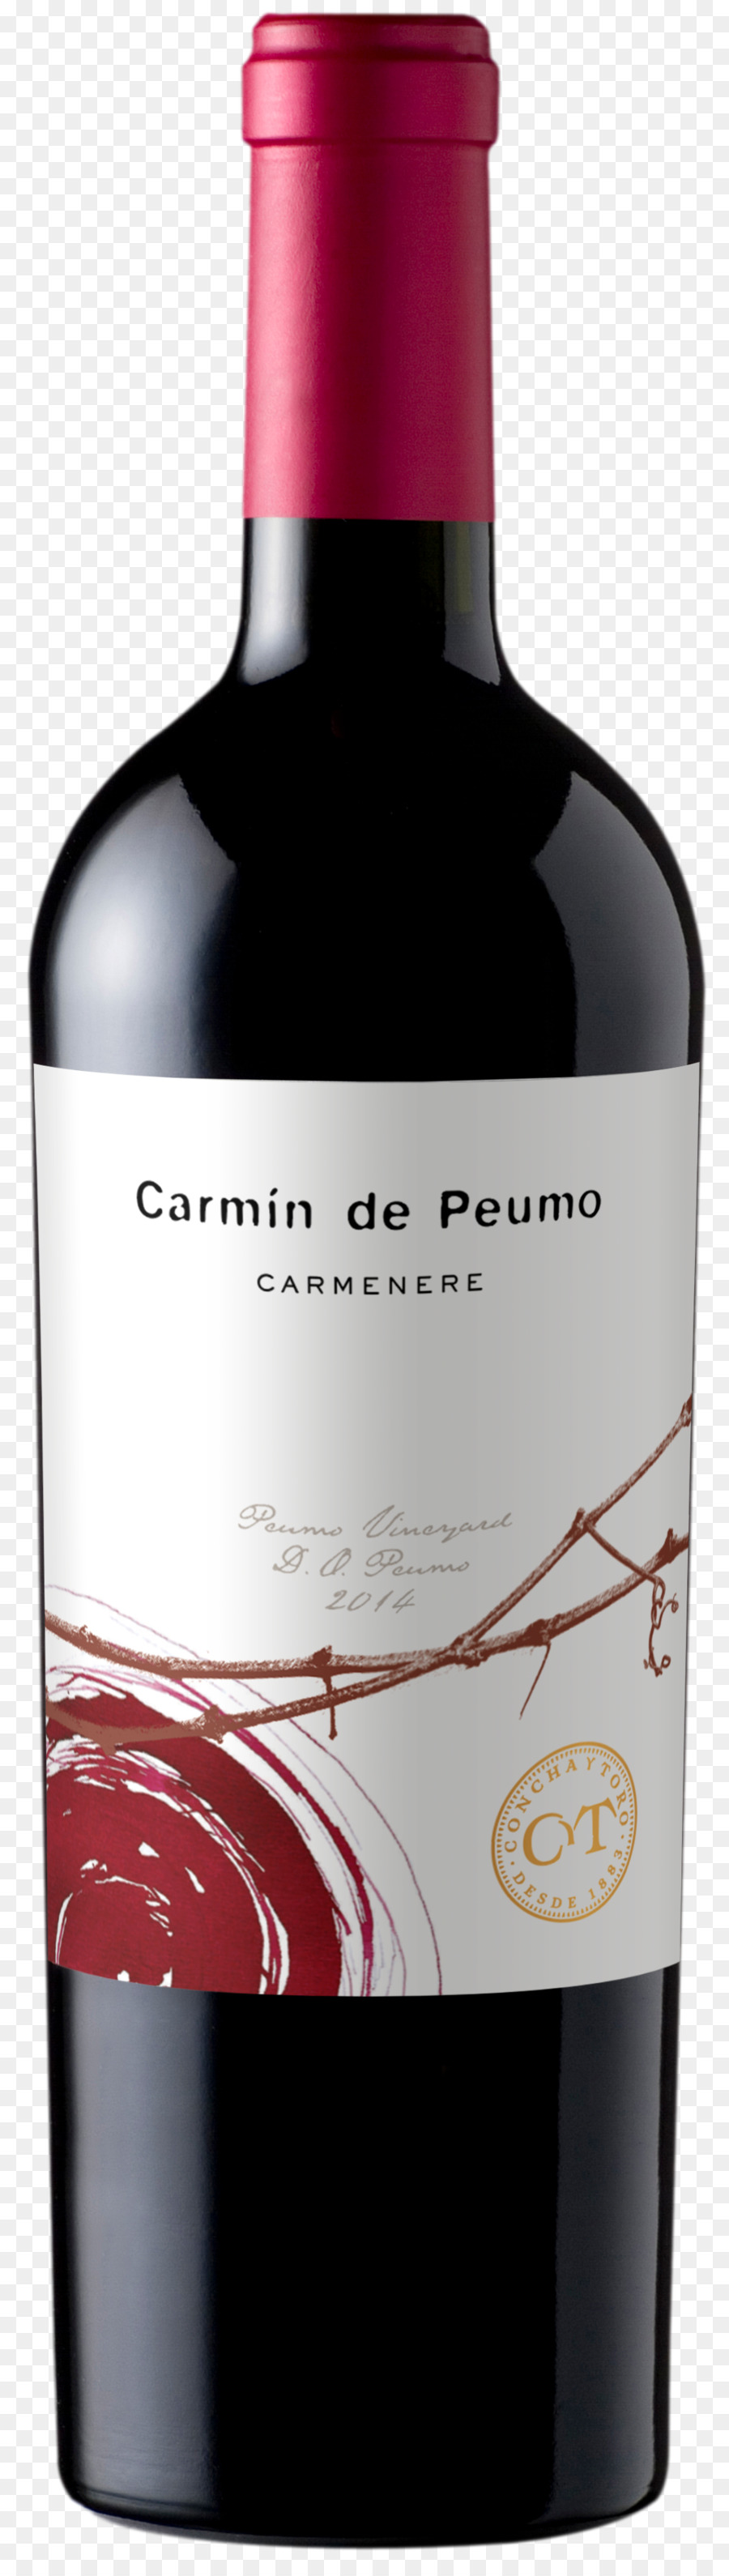 Carmenere Red Wine Peumo Vina Concha Y Toro - Wein